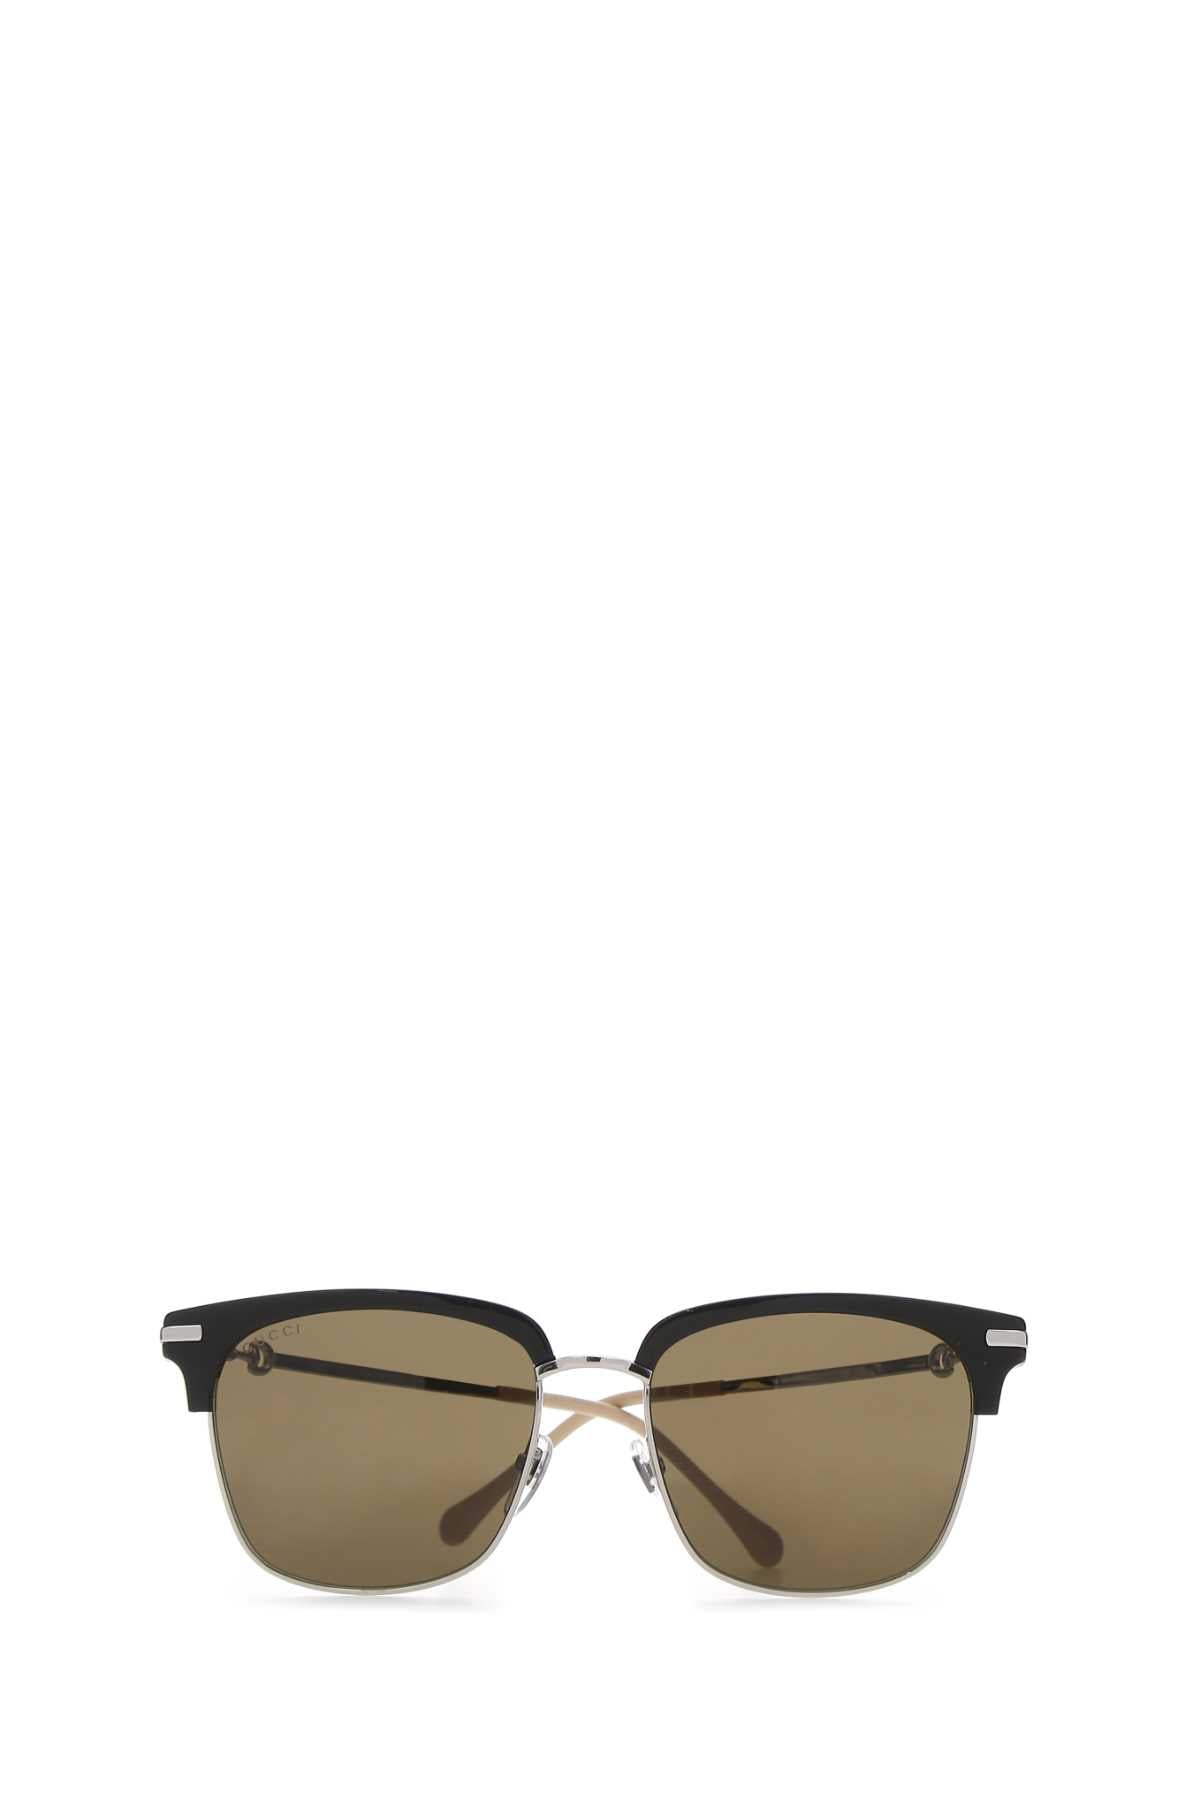 Gucci Eyewear Horsebit Square Frame Sunglasses In Multi